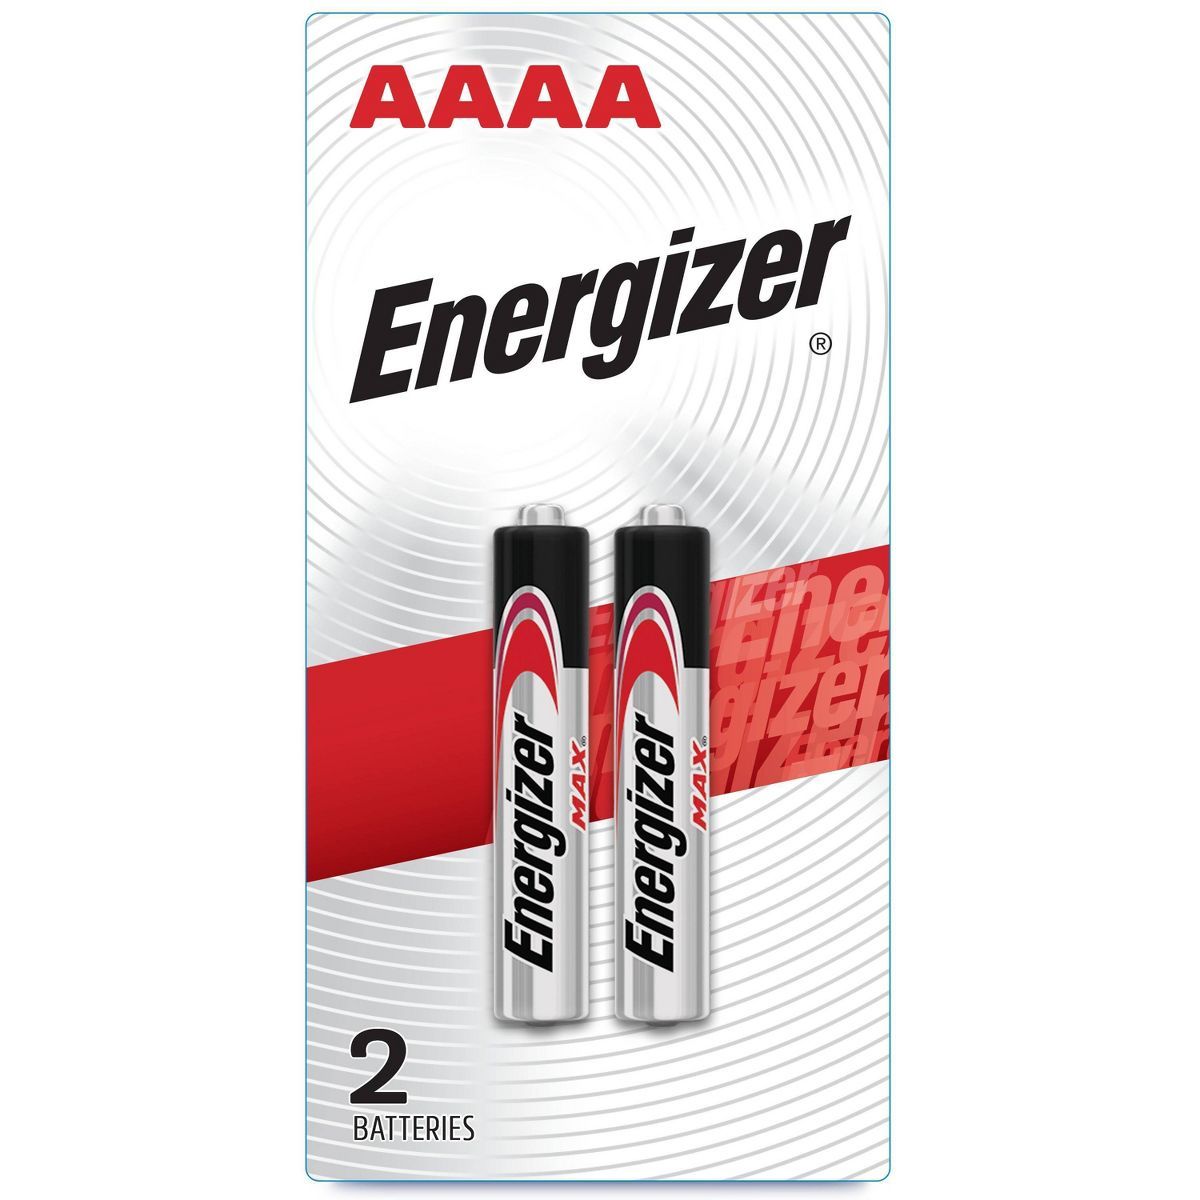 Energizer 2pk AAAA Batteries | Target